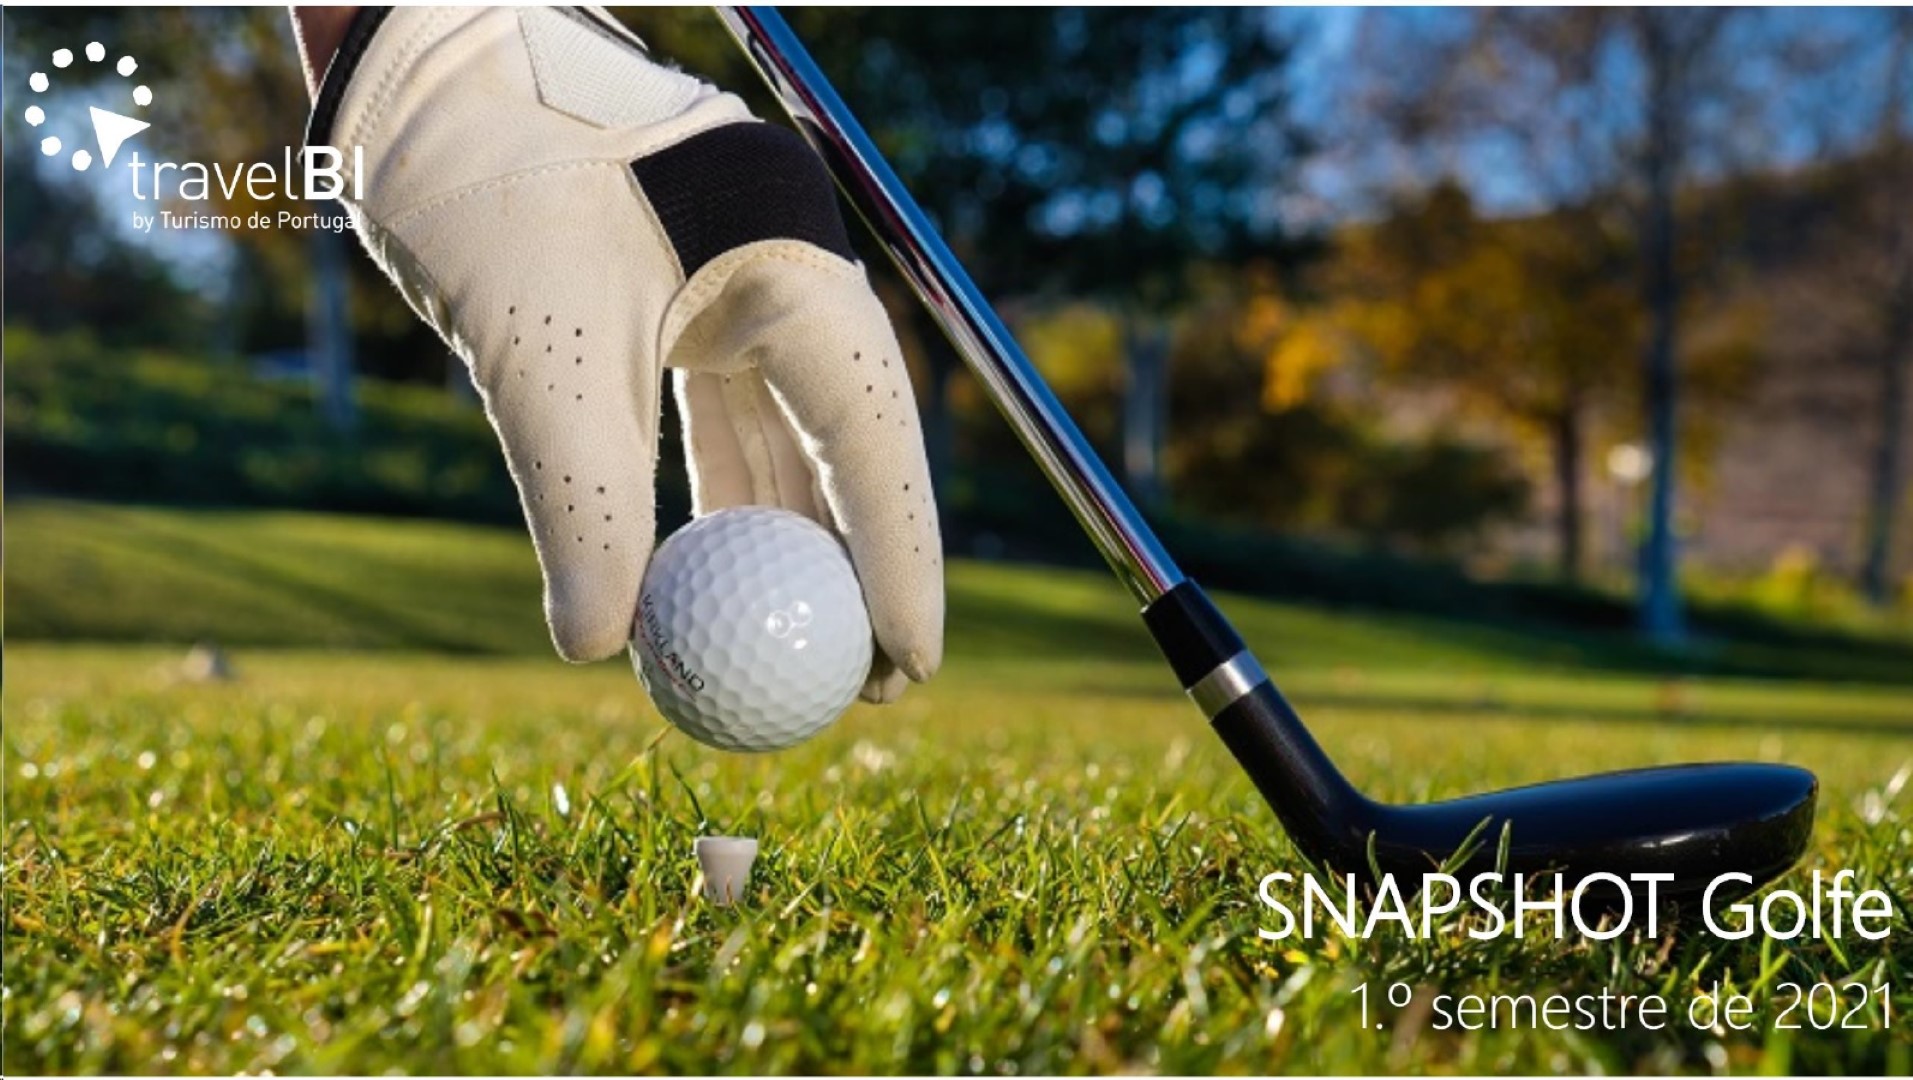 Snapshot Golfe | 1.º semestre 2021